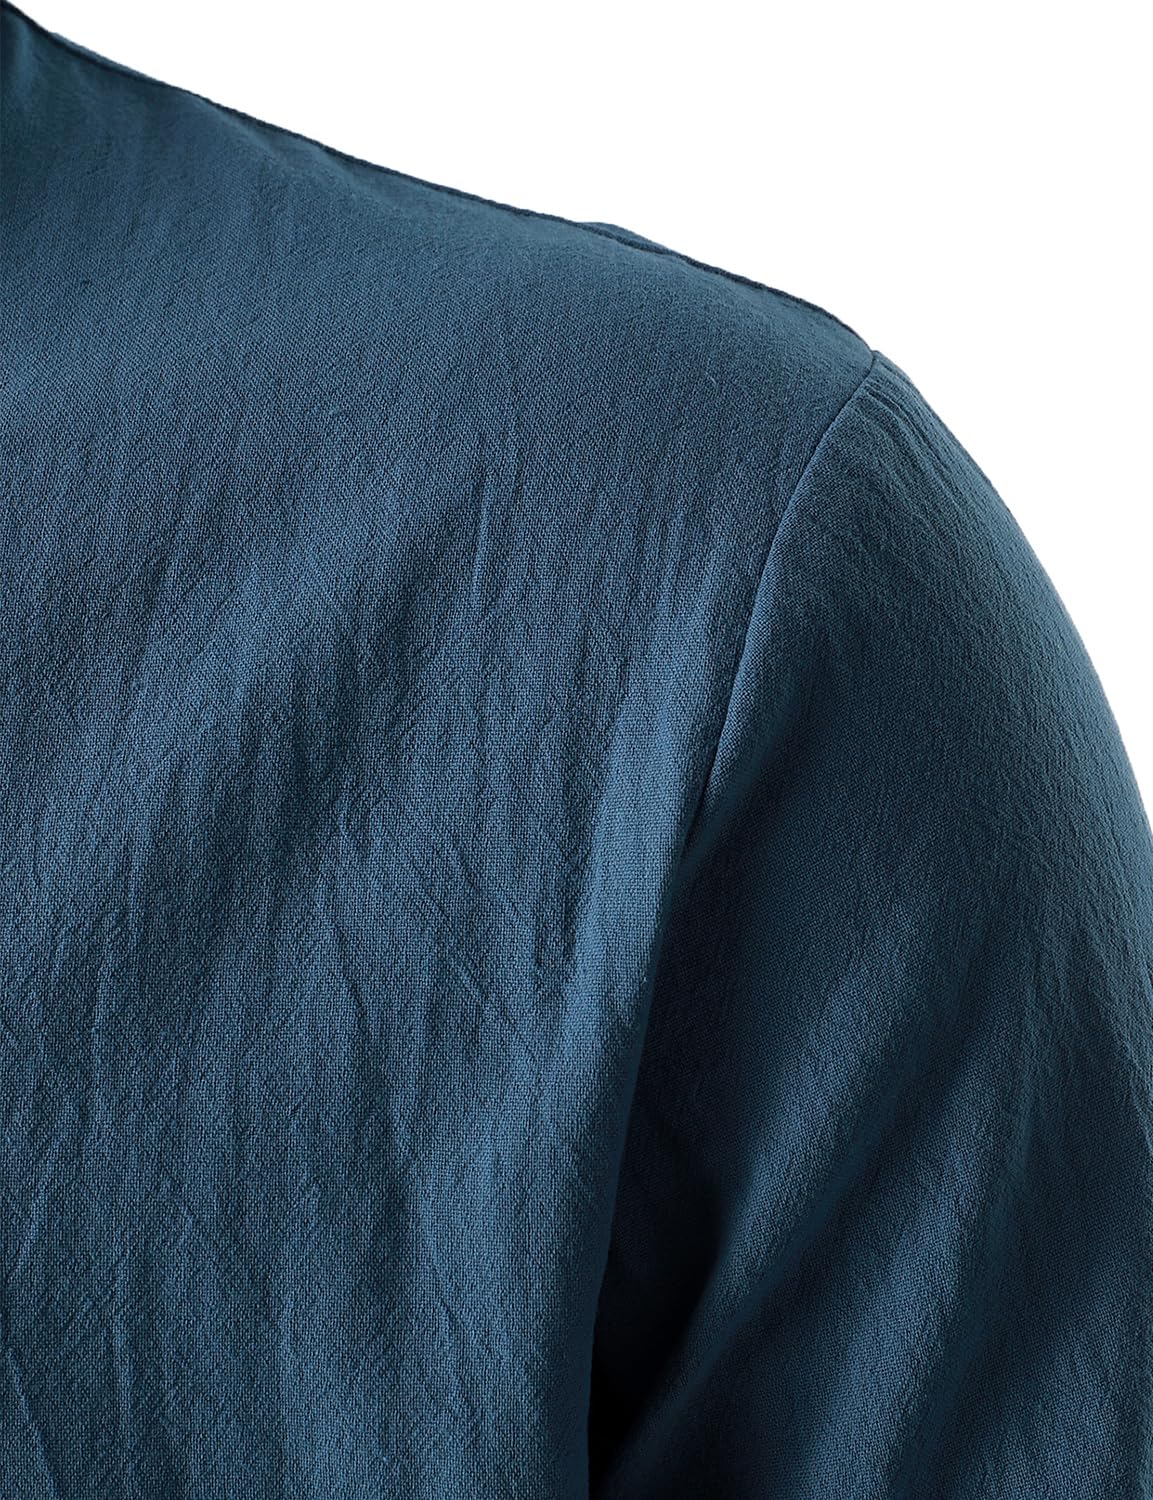 Men's Medieval Vintage Long Sleeve Lace Up Shirt